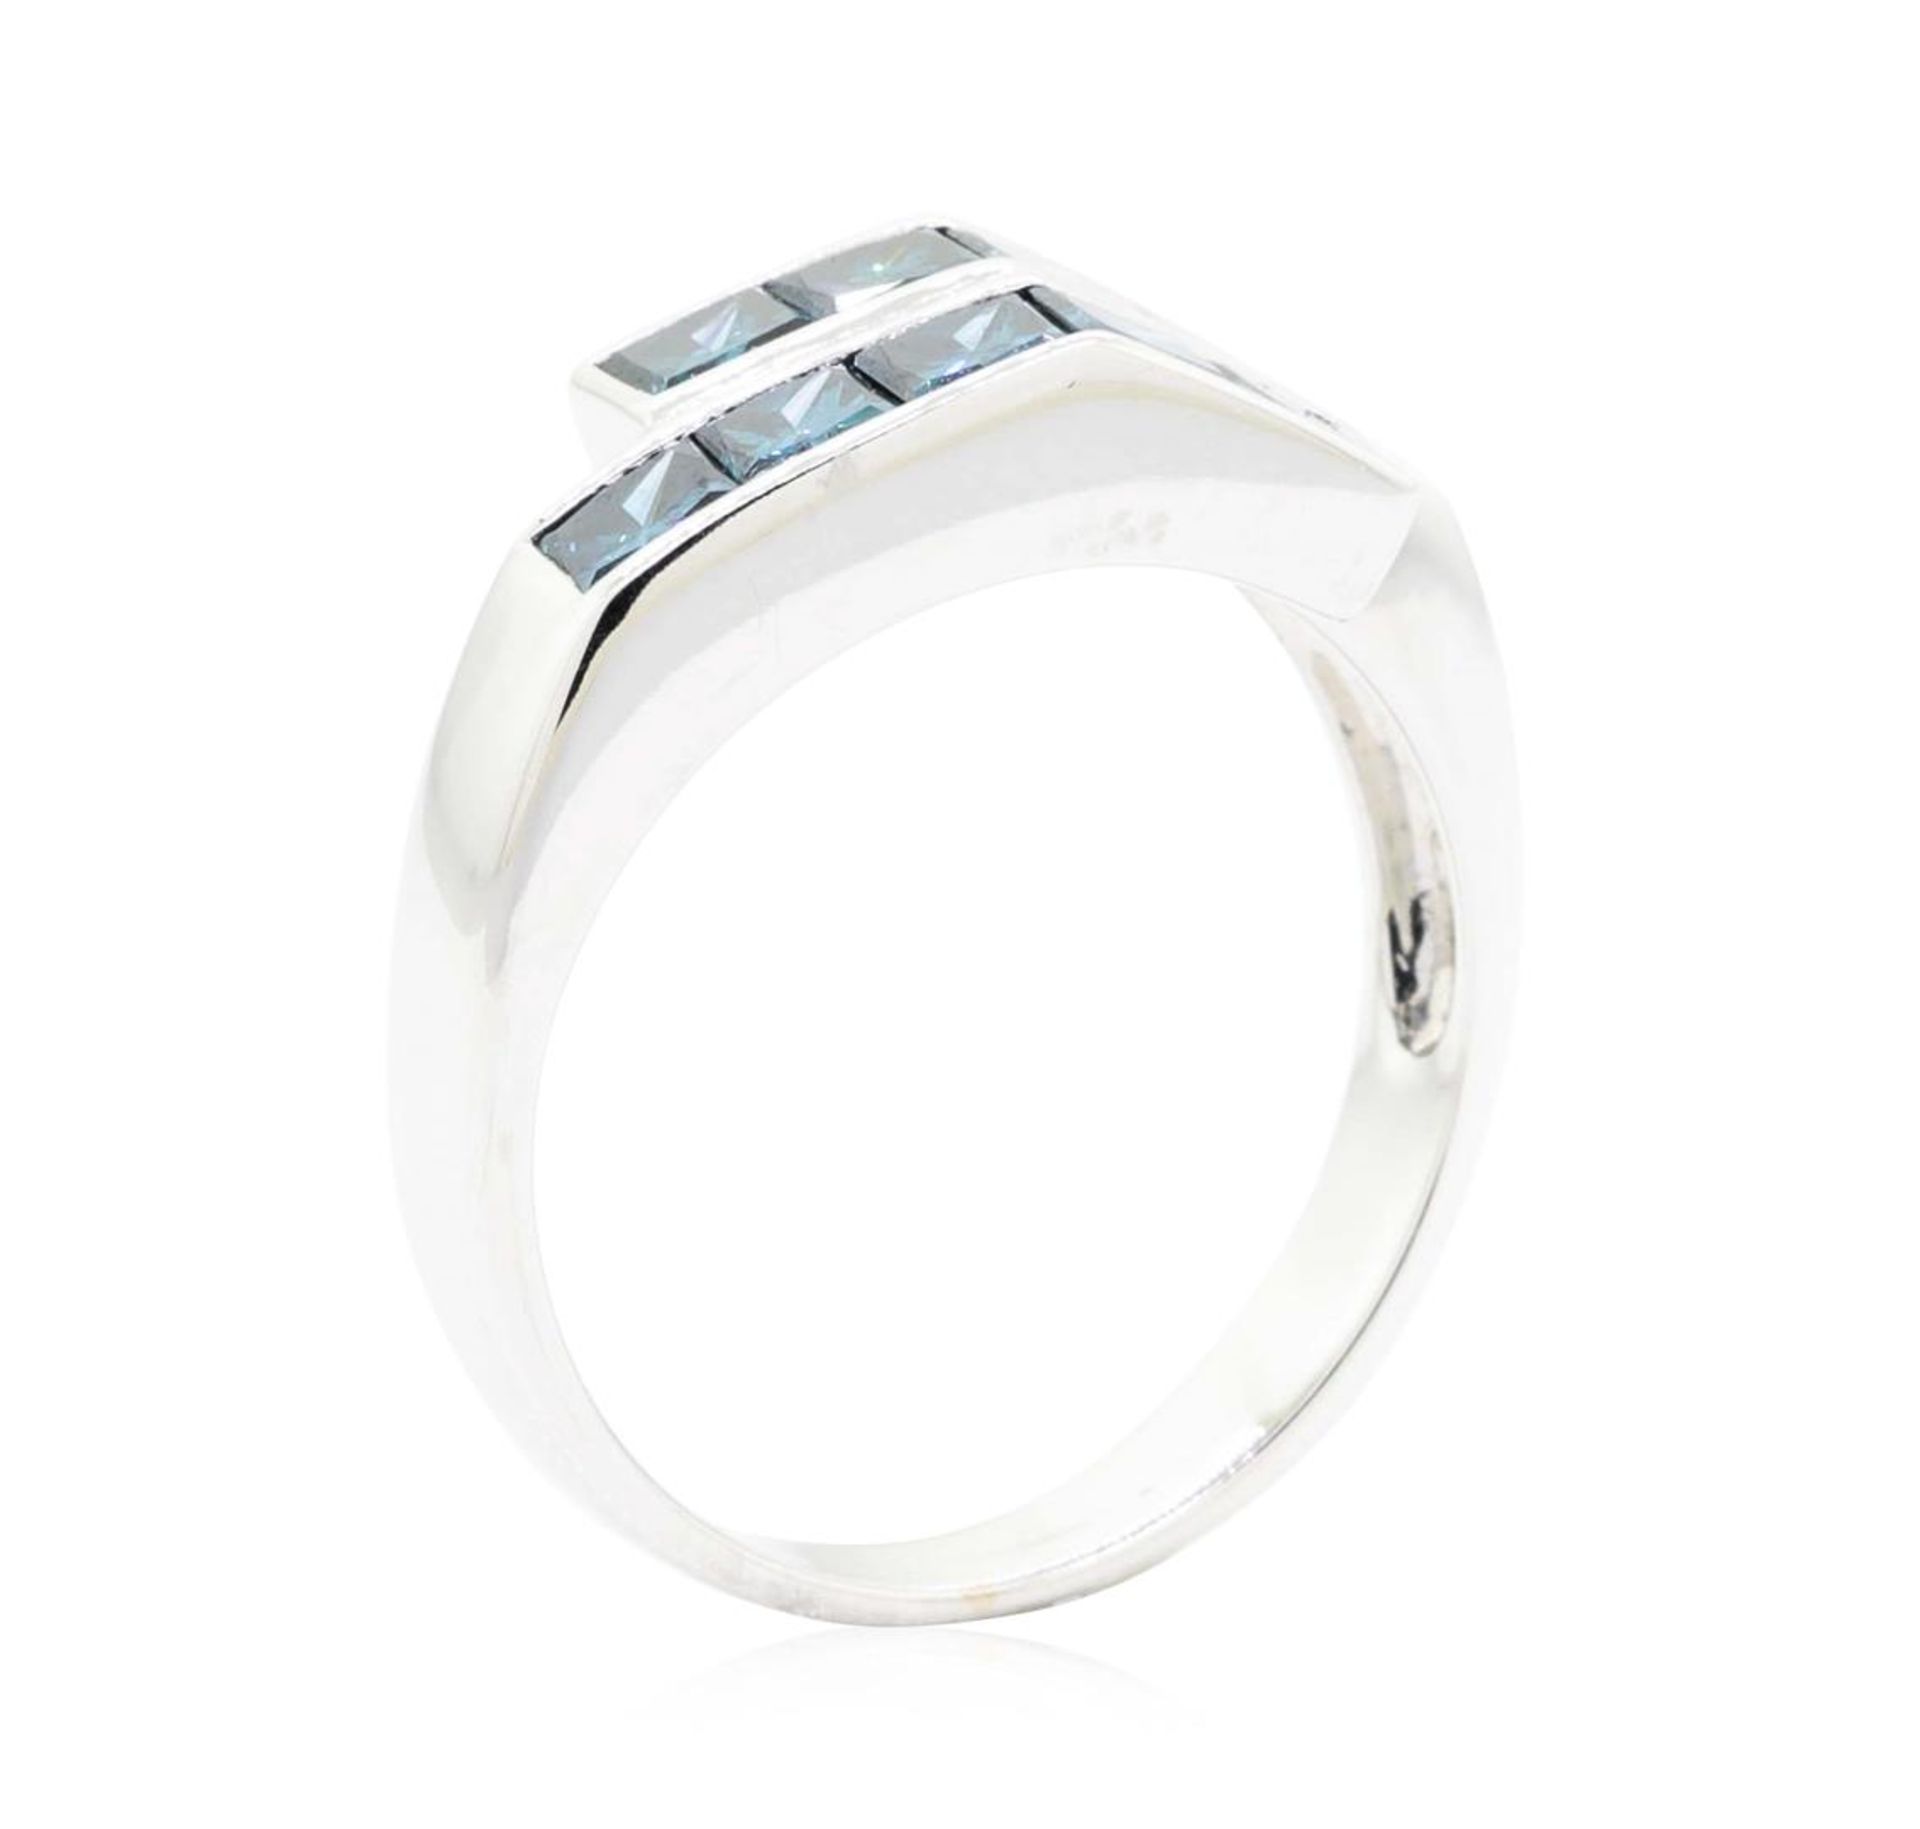 1.58 ctw Princess Cut Diamond Ring - 14KT White Gold - Image 4 of 5